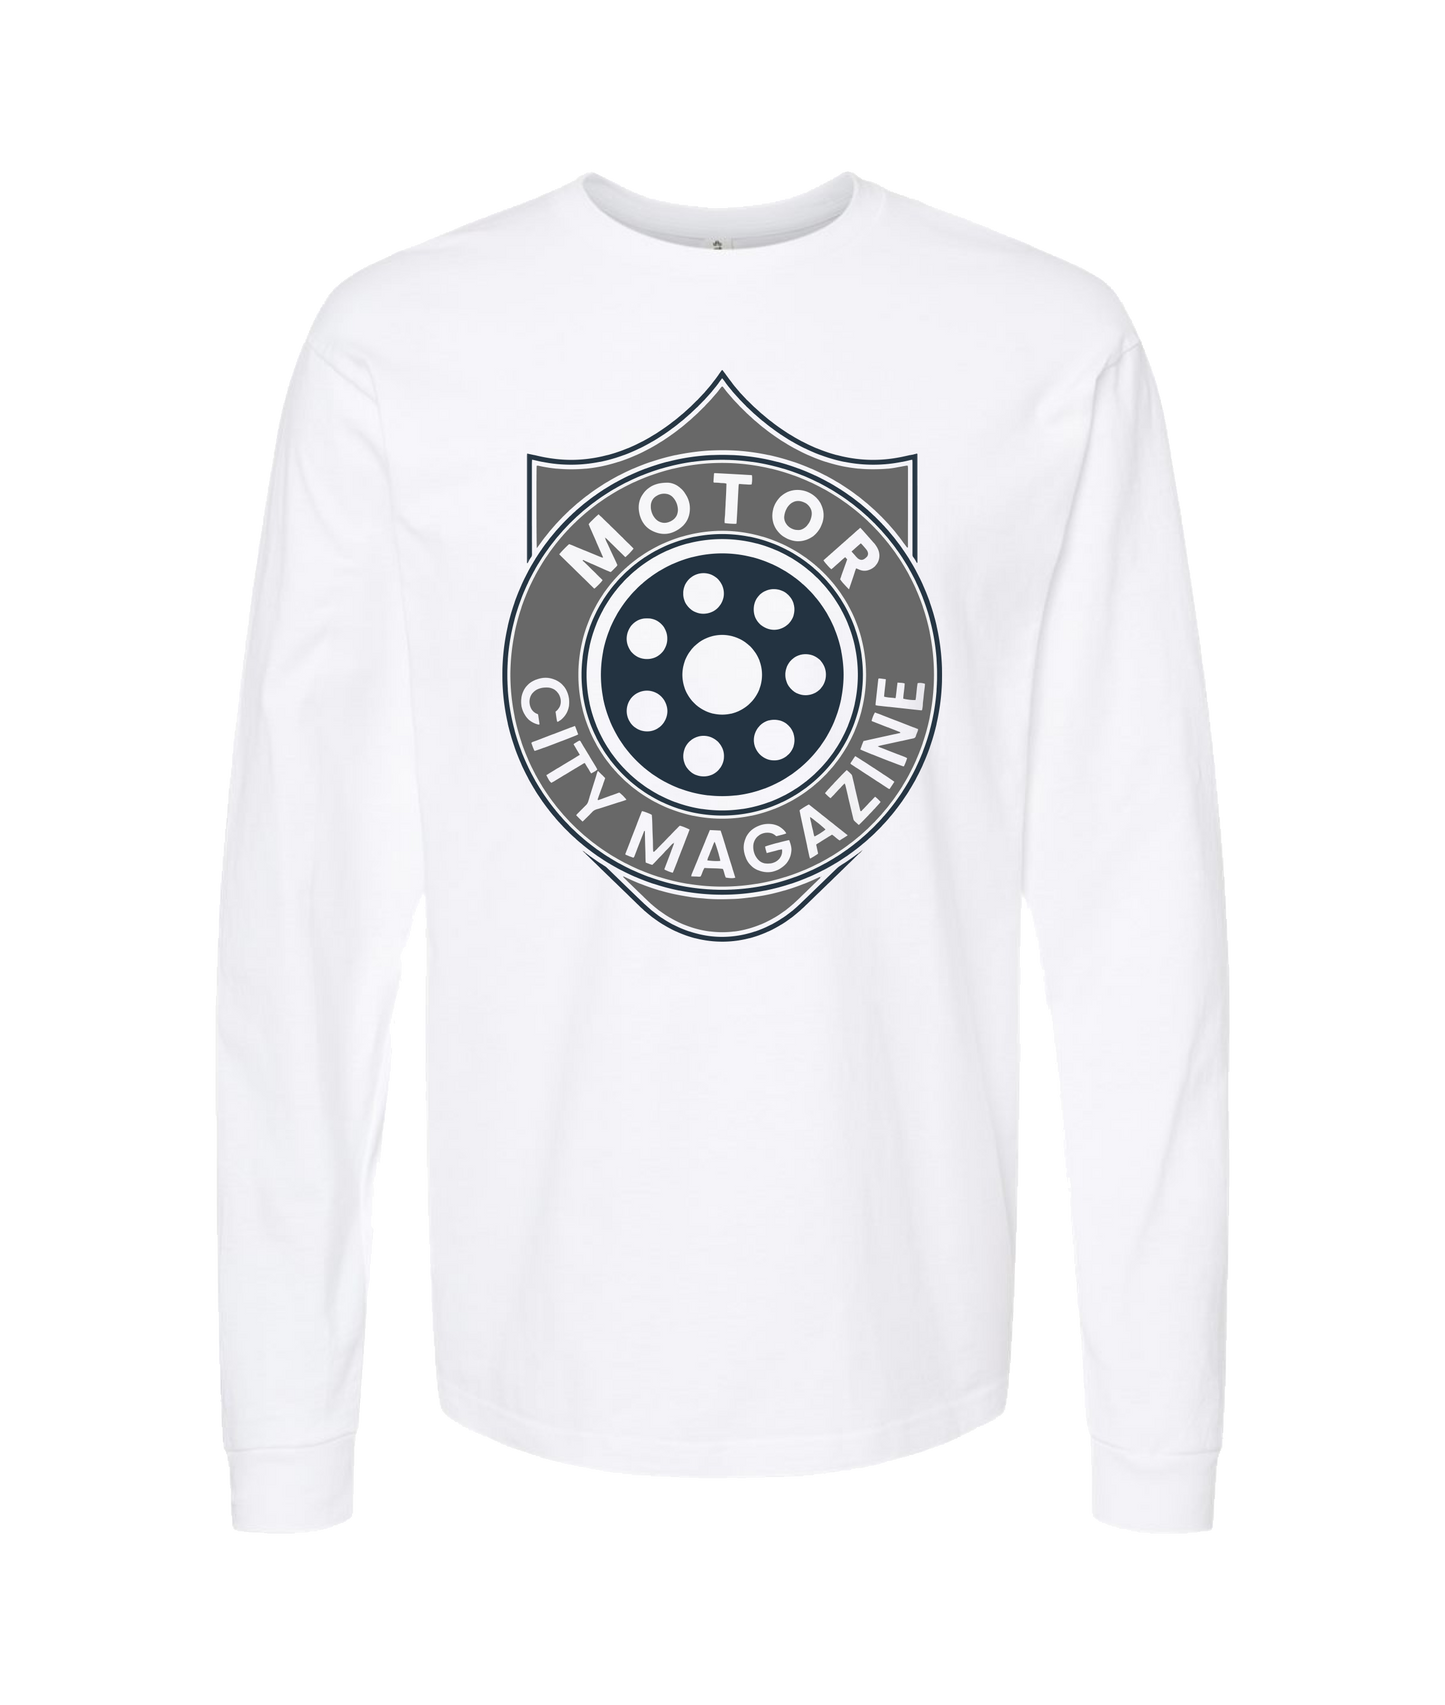 Motor City Mag Merch - LOGO 1 - White Long Sleeve T